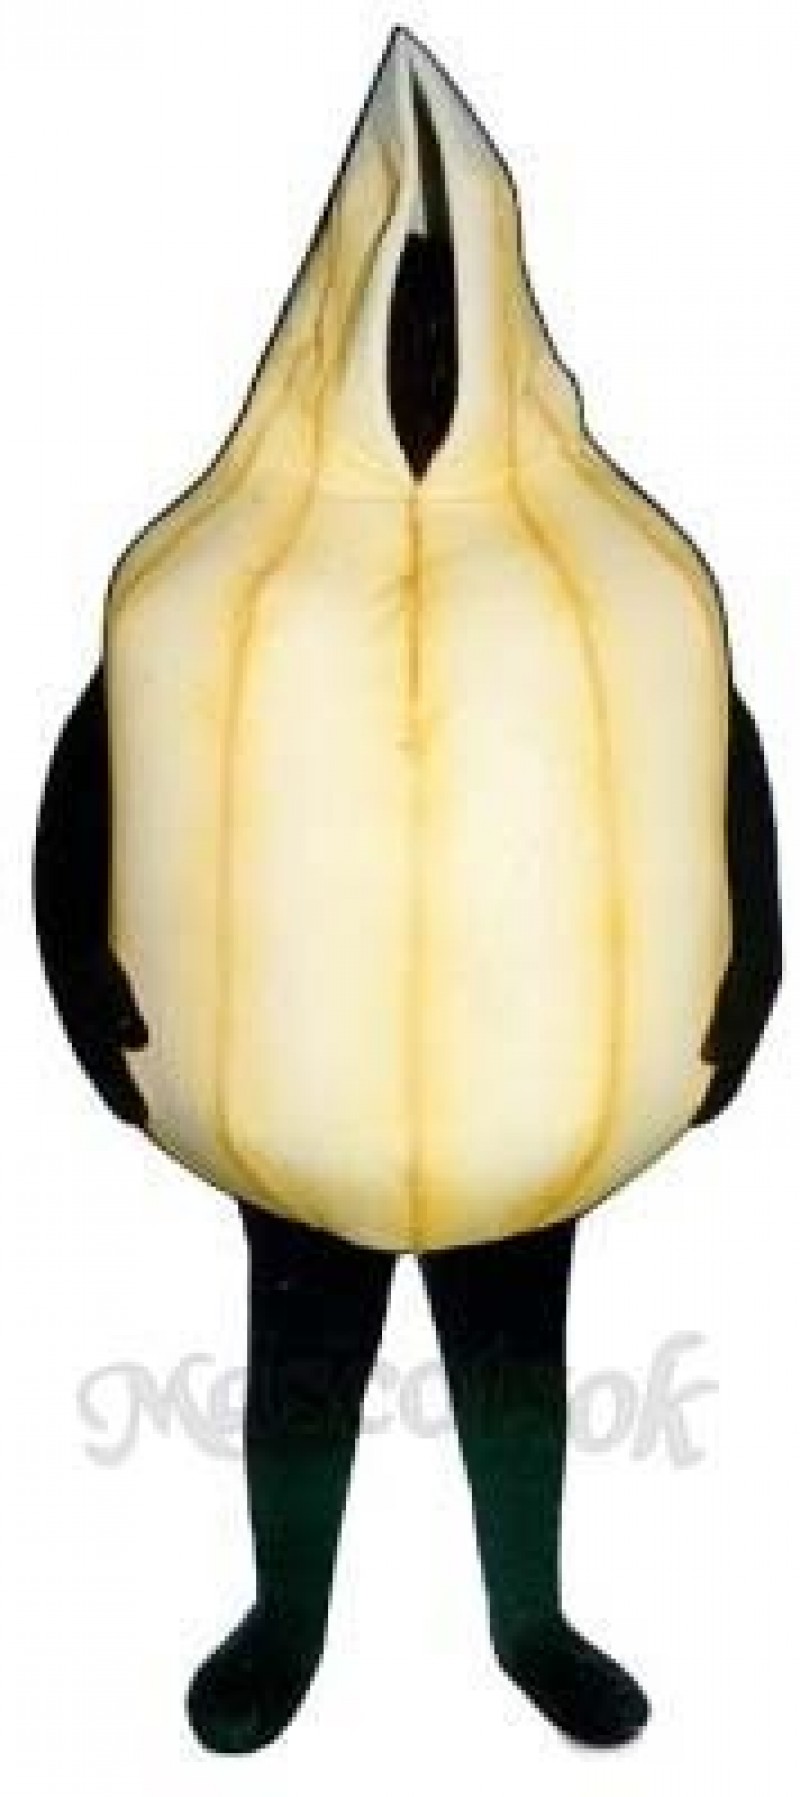 Onion Mascot Costume